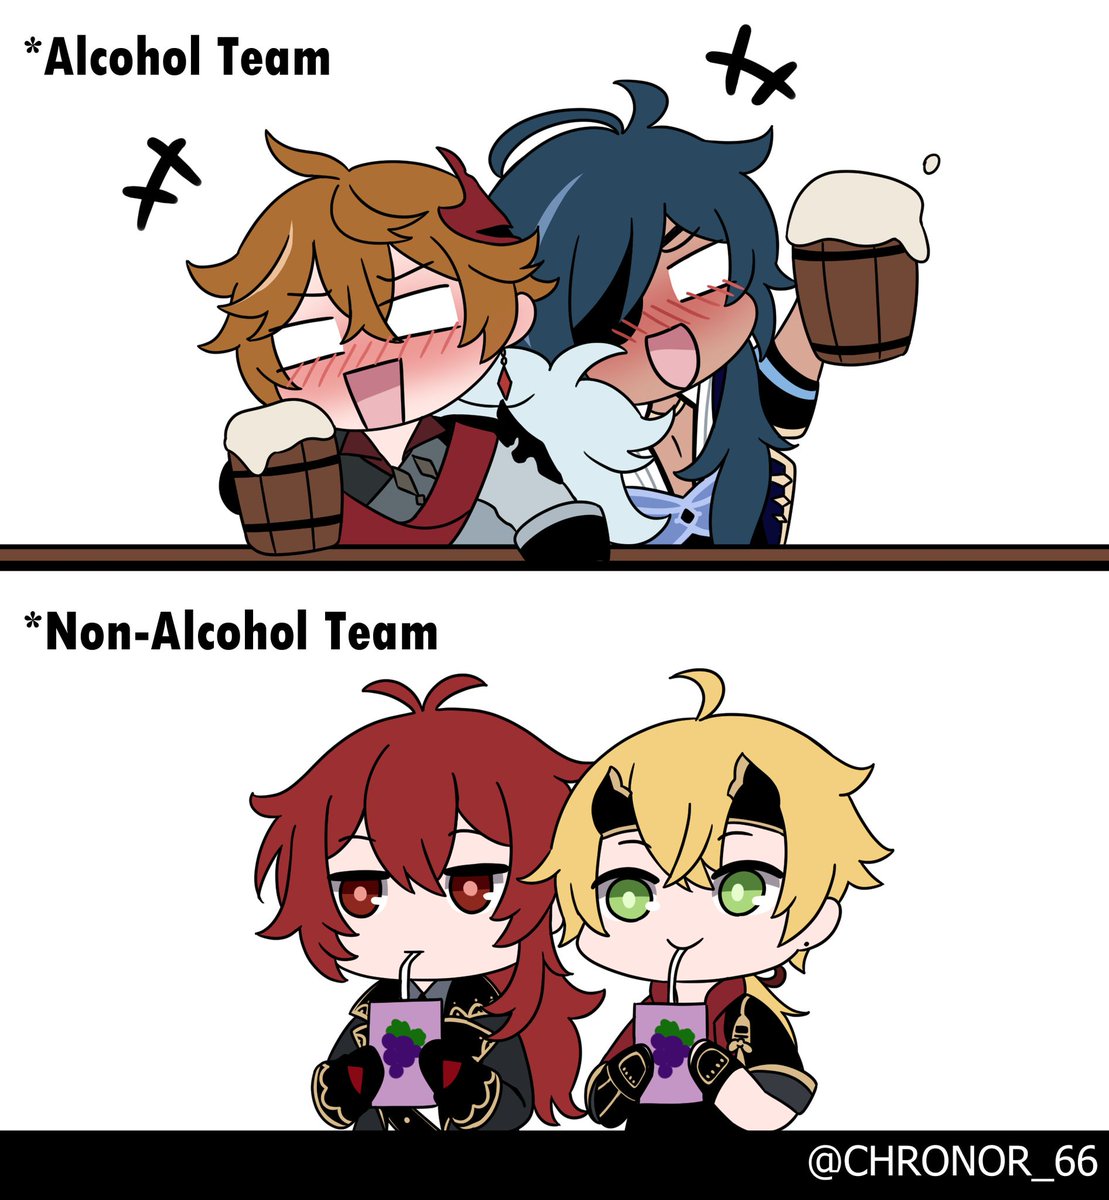 alcohol vs non-alcohol
#原神 #GenshinImpact 
#Kaeya #Diluc #Thoma #tartaglia 